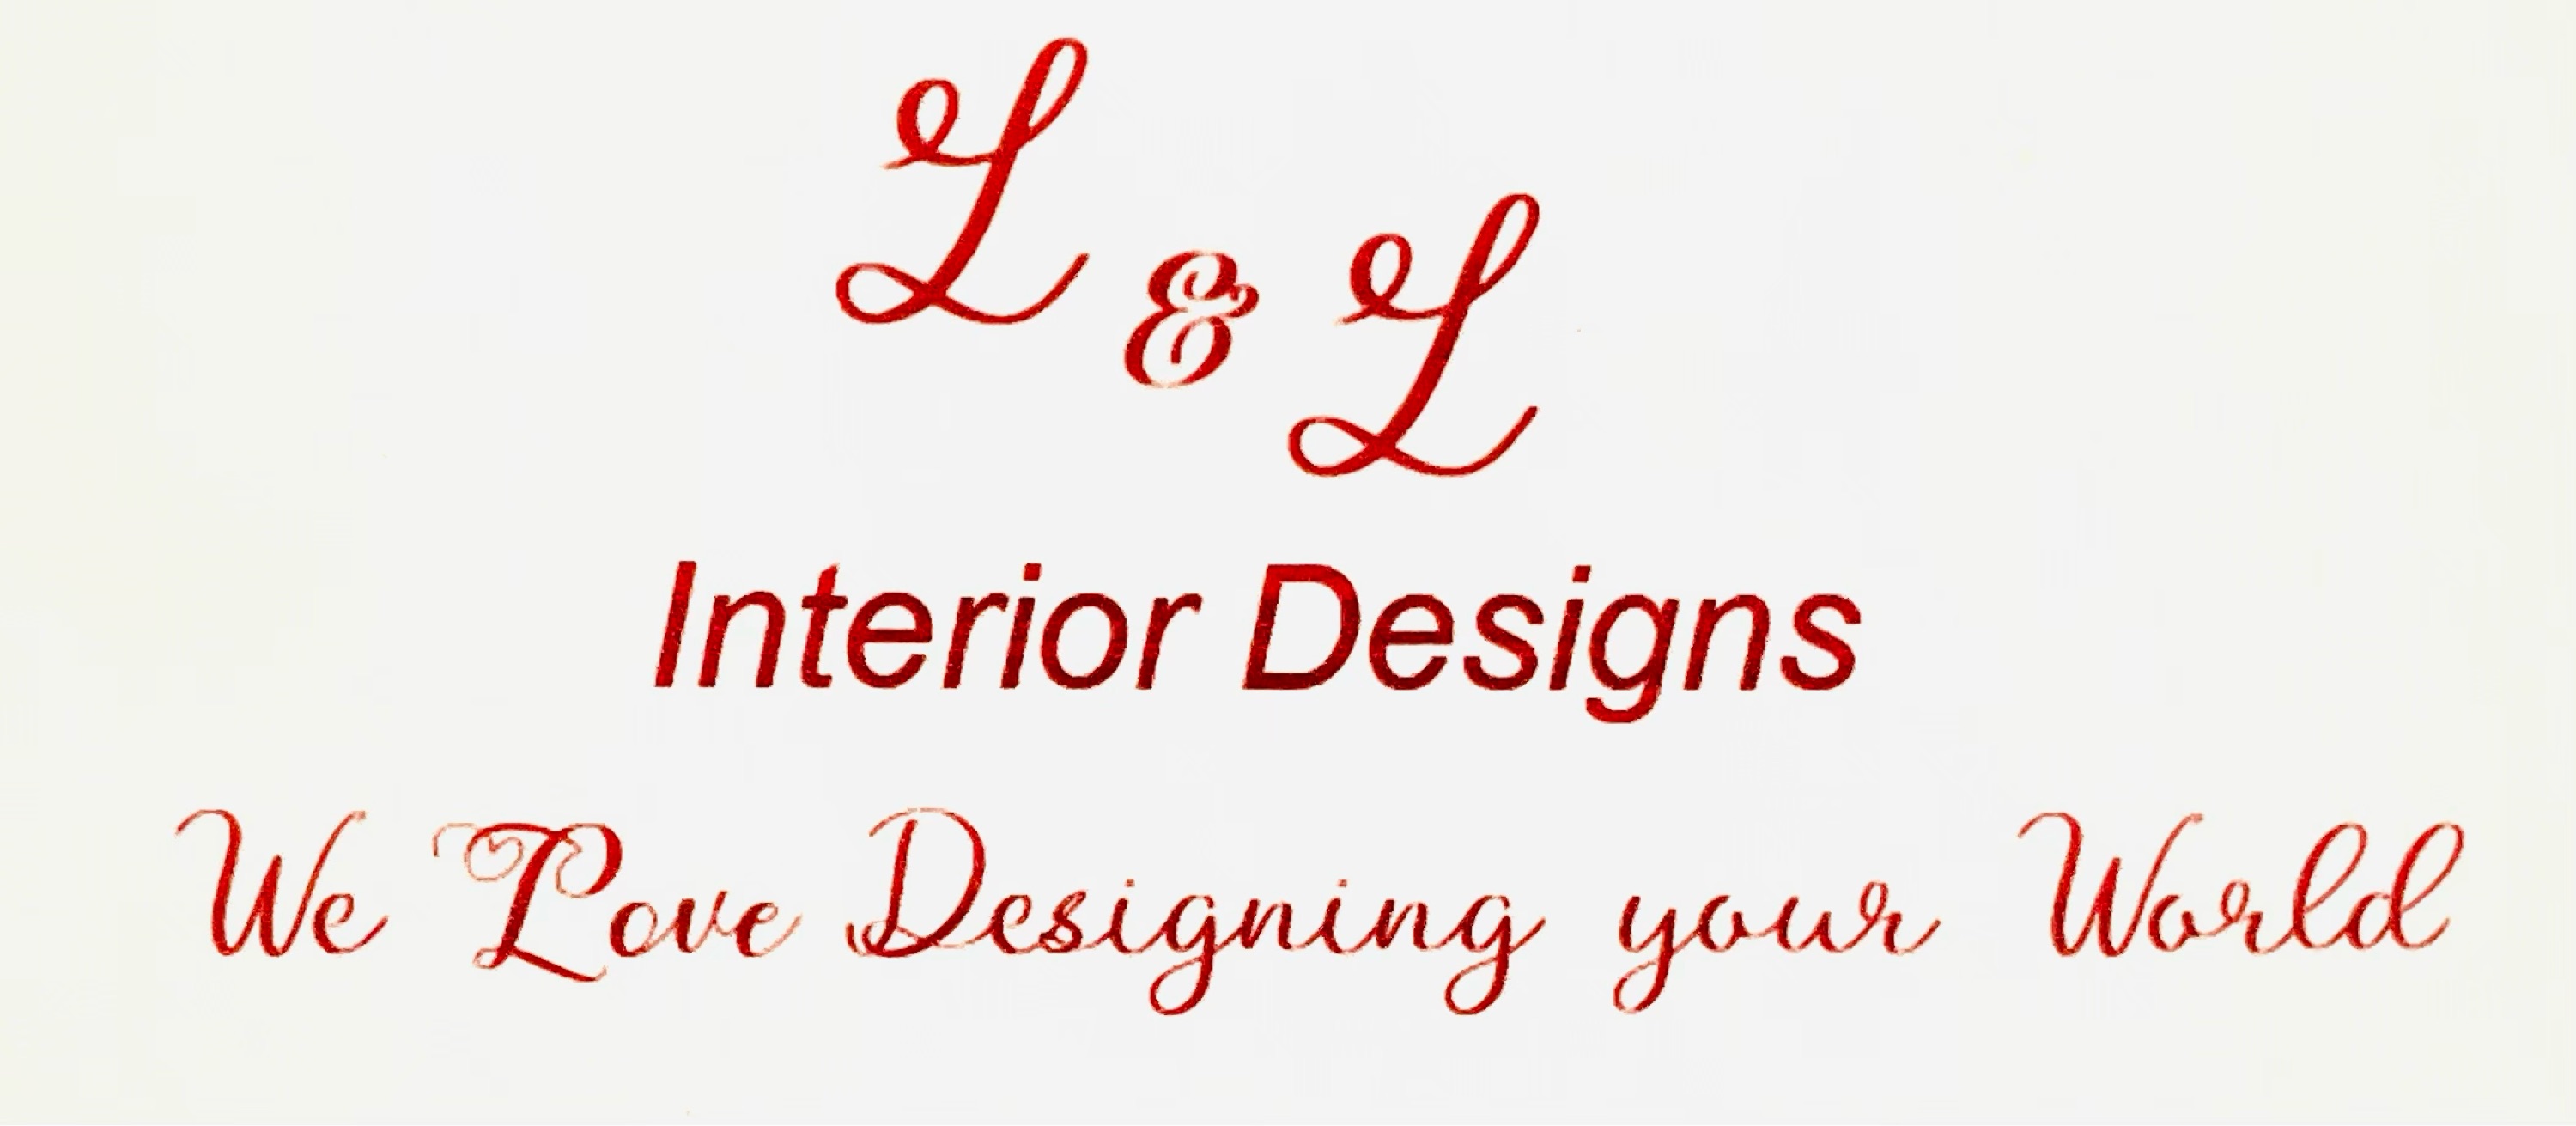 L & L Interior Designs Logo